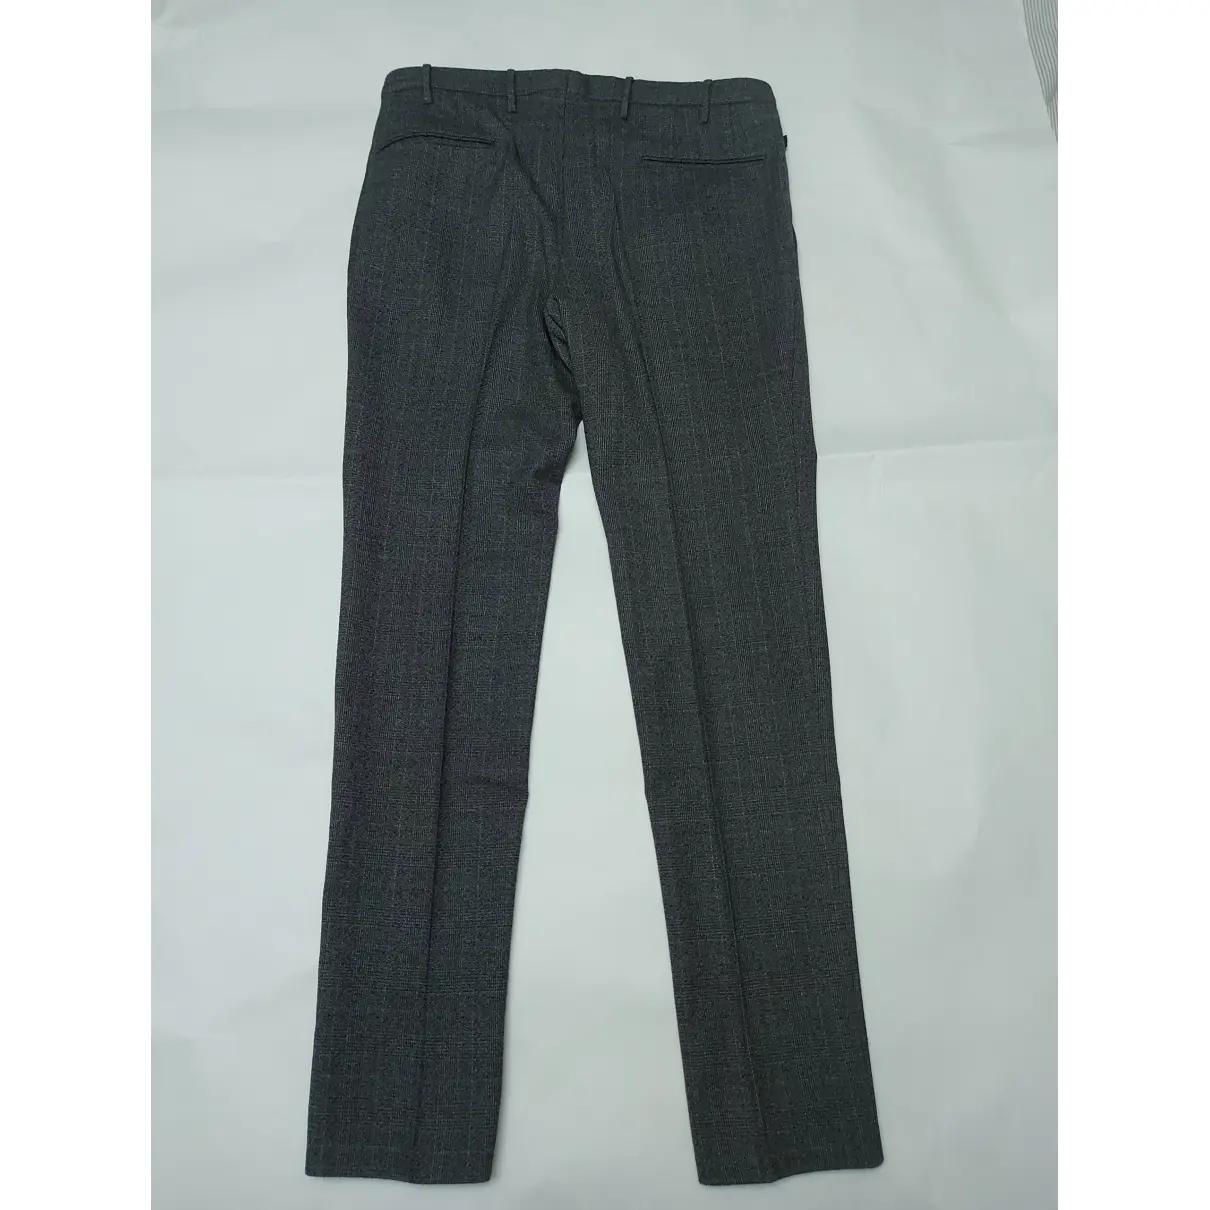 Buy Incotex Wool trousers online